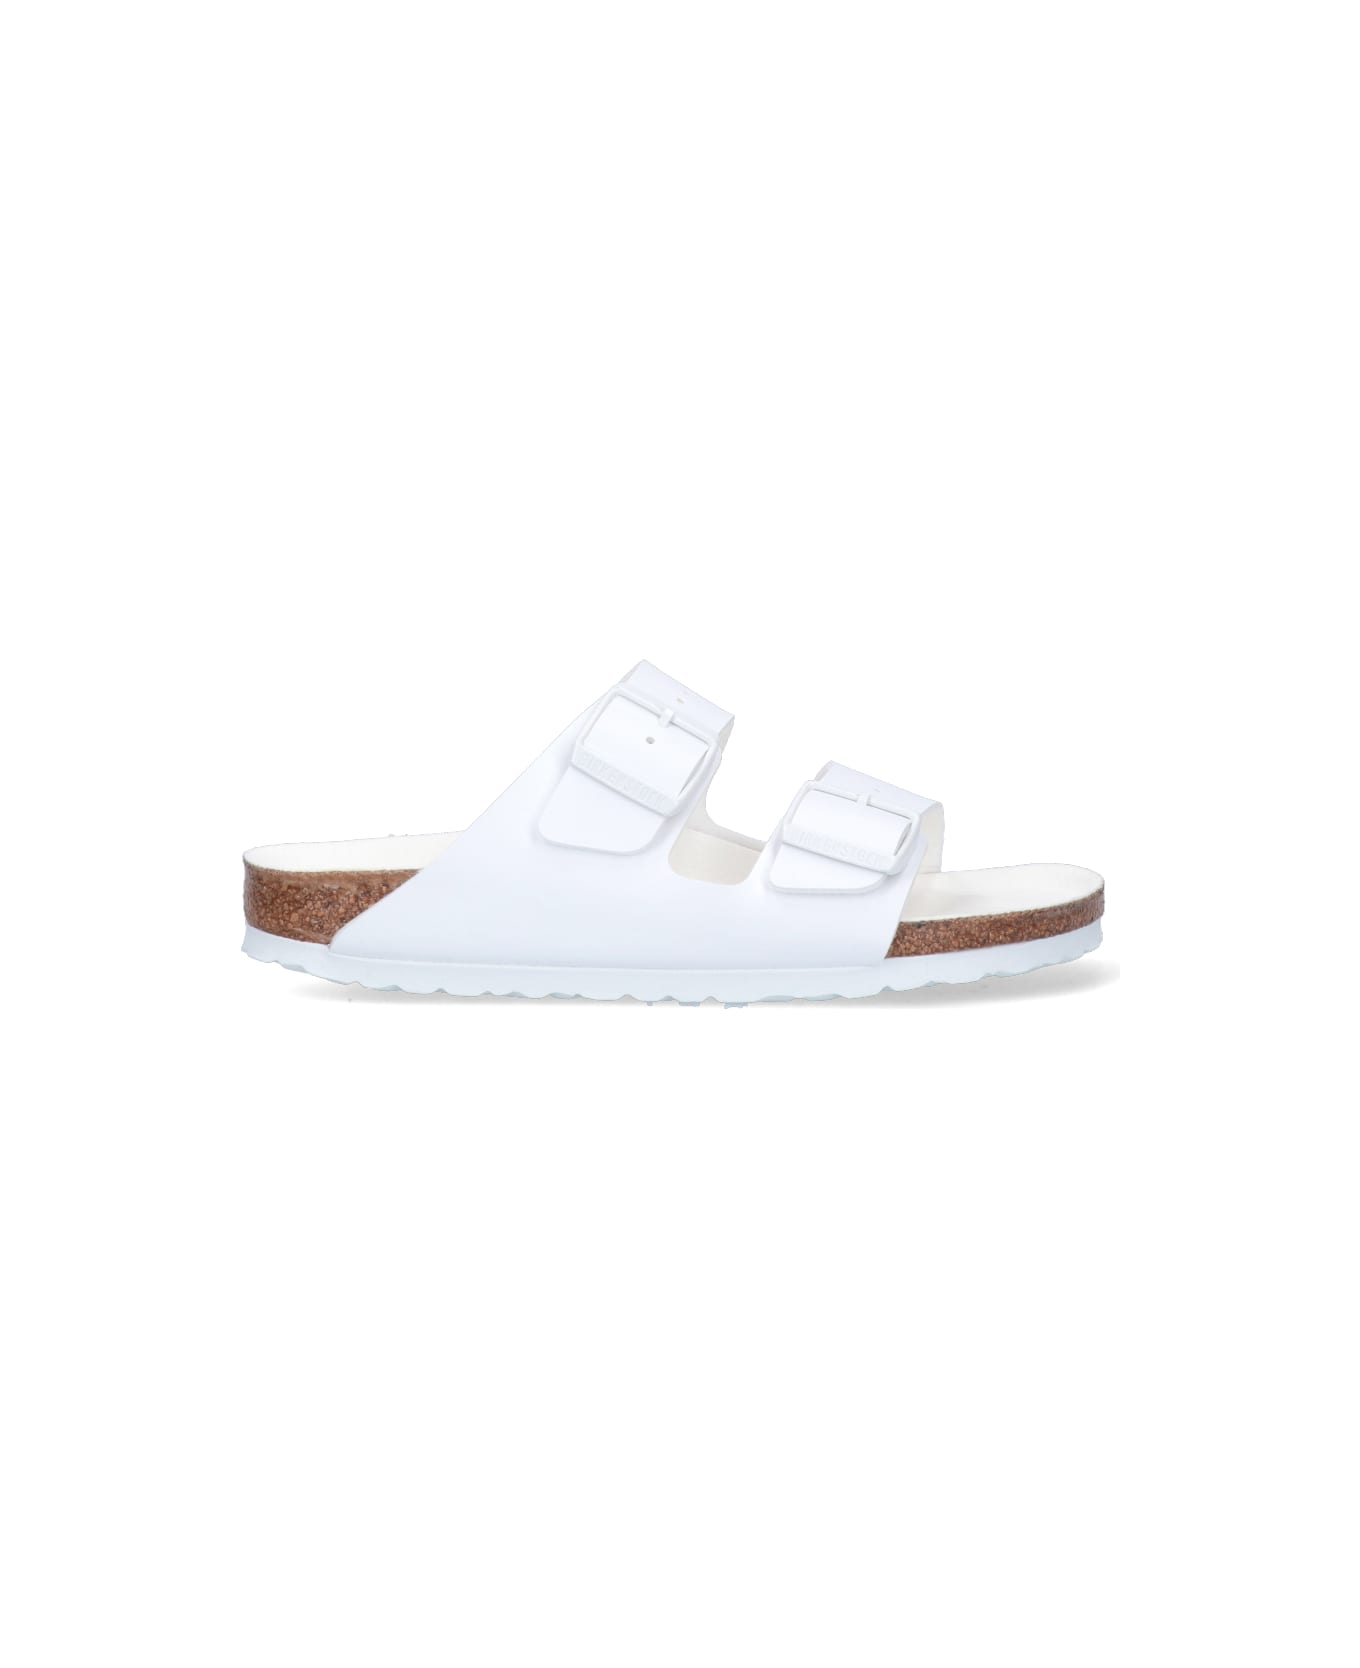 Birkenstock Flat Shoes - White